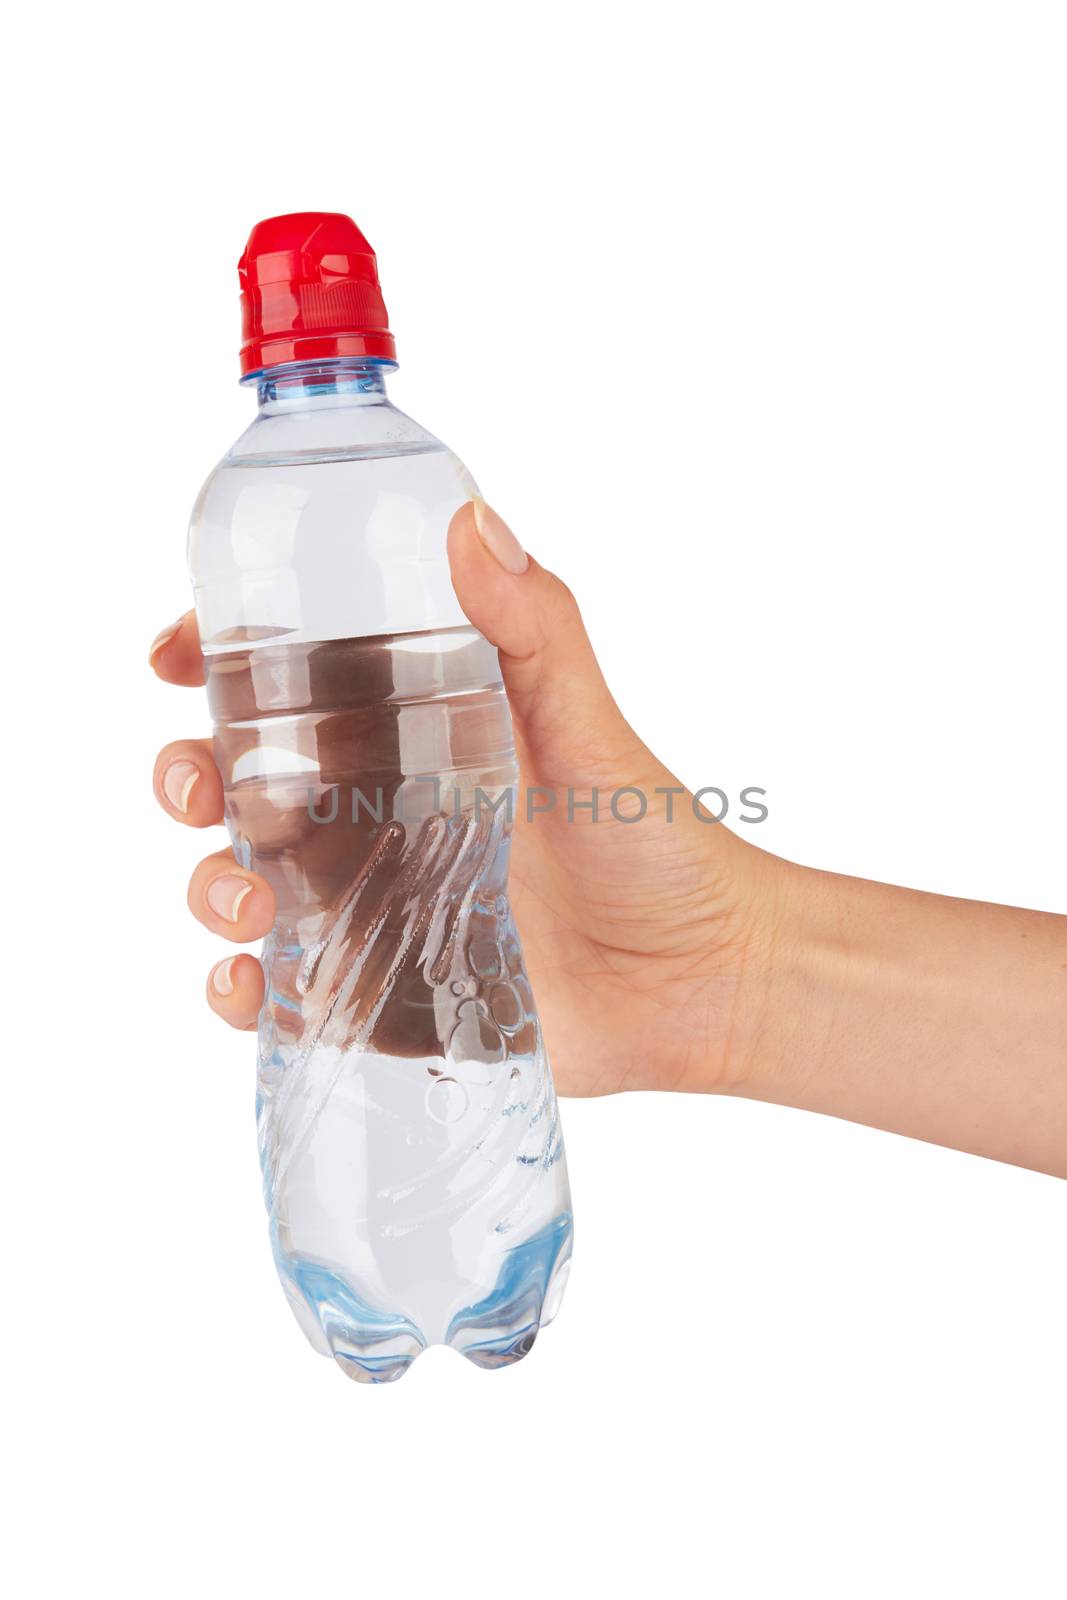 bottle of water by pioneer111